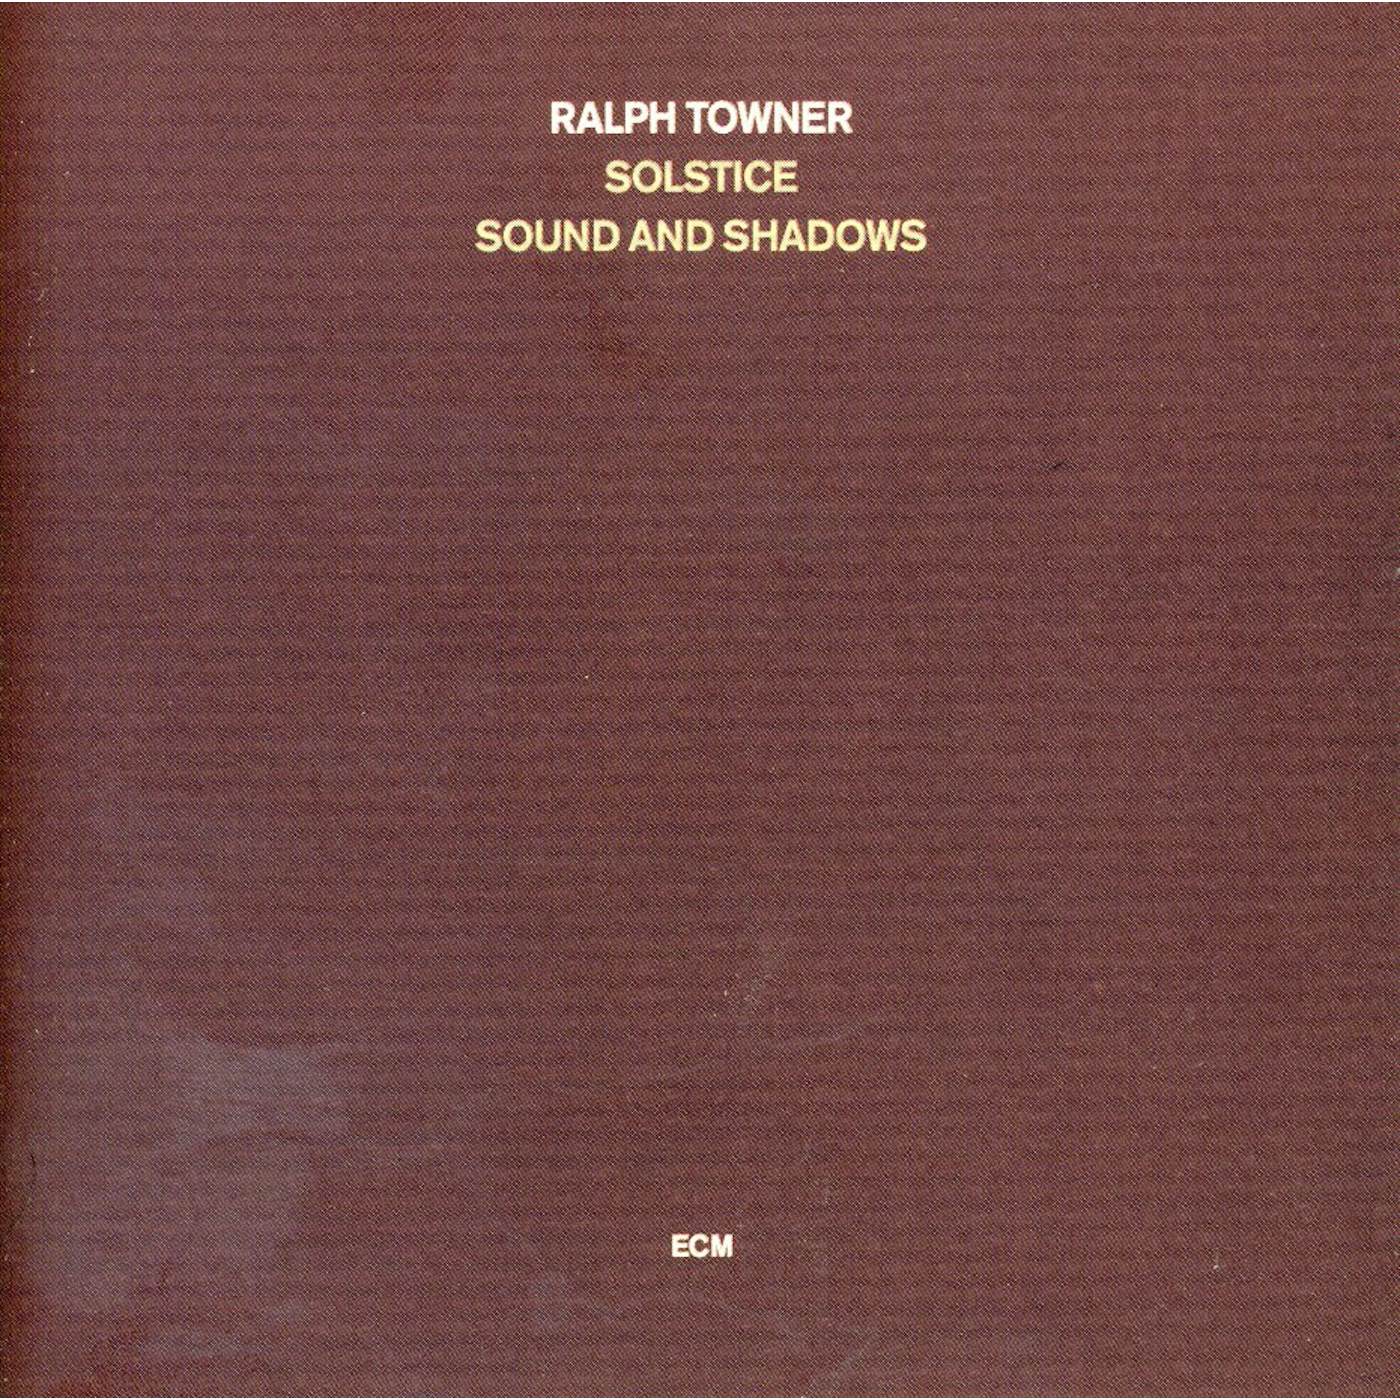 Ralph Towner SOLSTICE SOUND & SHADOWS CD